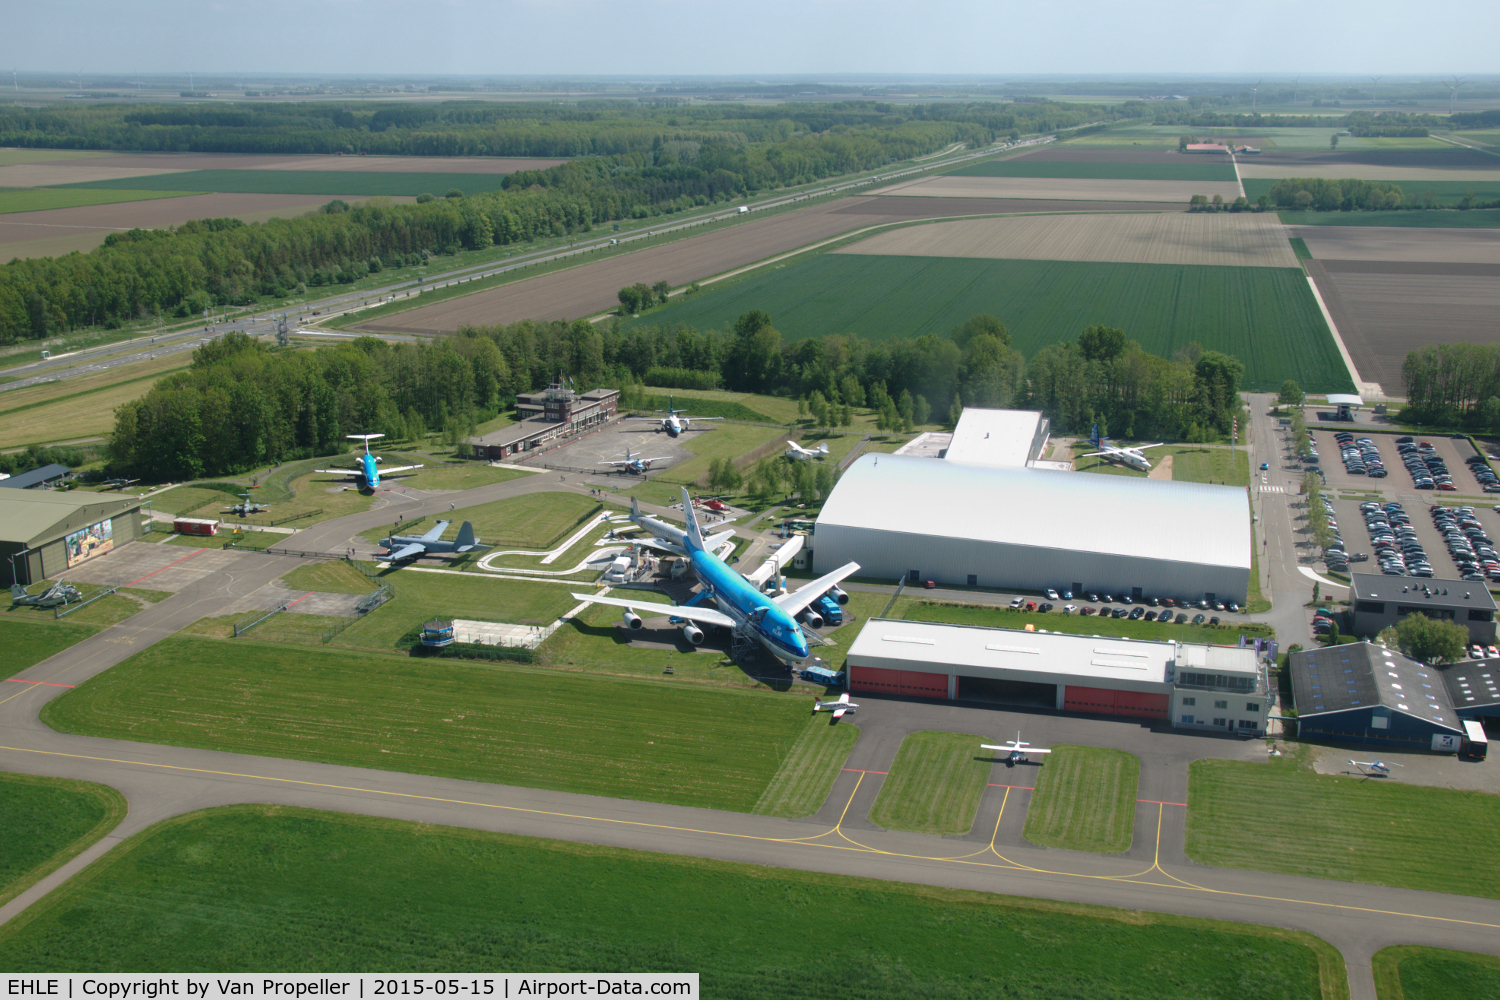 Lelystad Airport, Lelystad Netherlands (EHLE) - The Aviodrome aviation museum at Lelystad airport: well worth a visit.